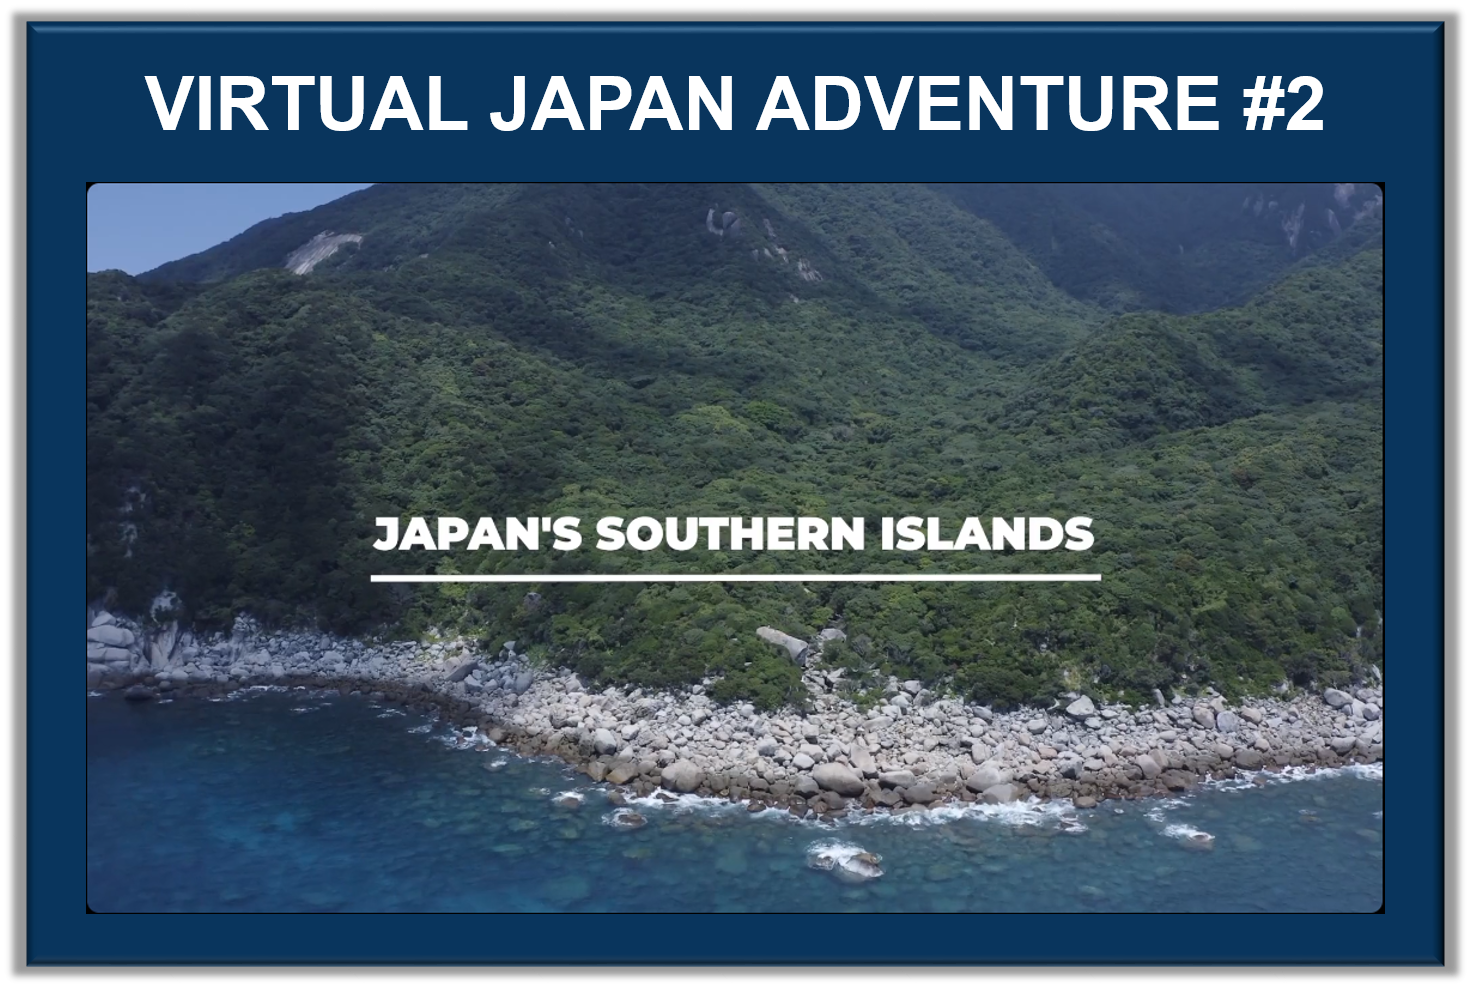 VJA #2: MAINLAND JAPAN'S SOUTHERN ISLANDS